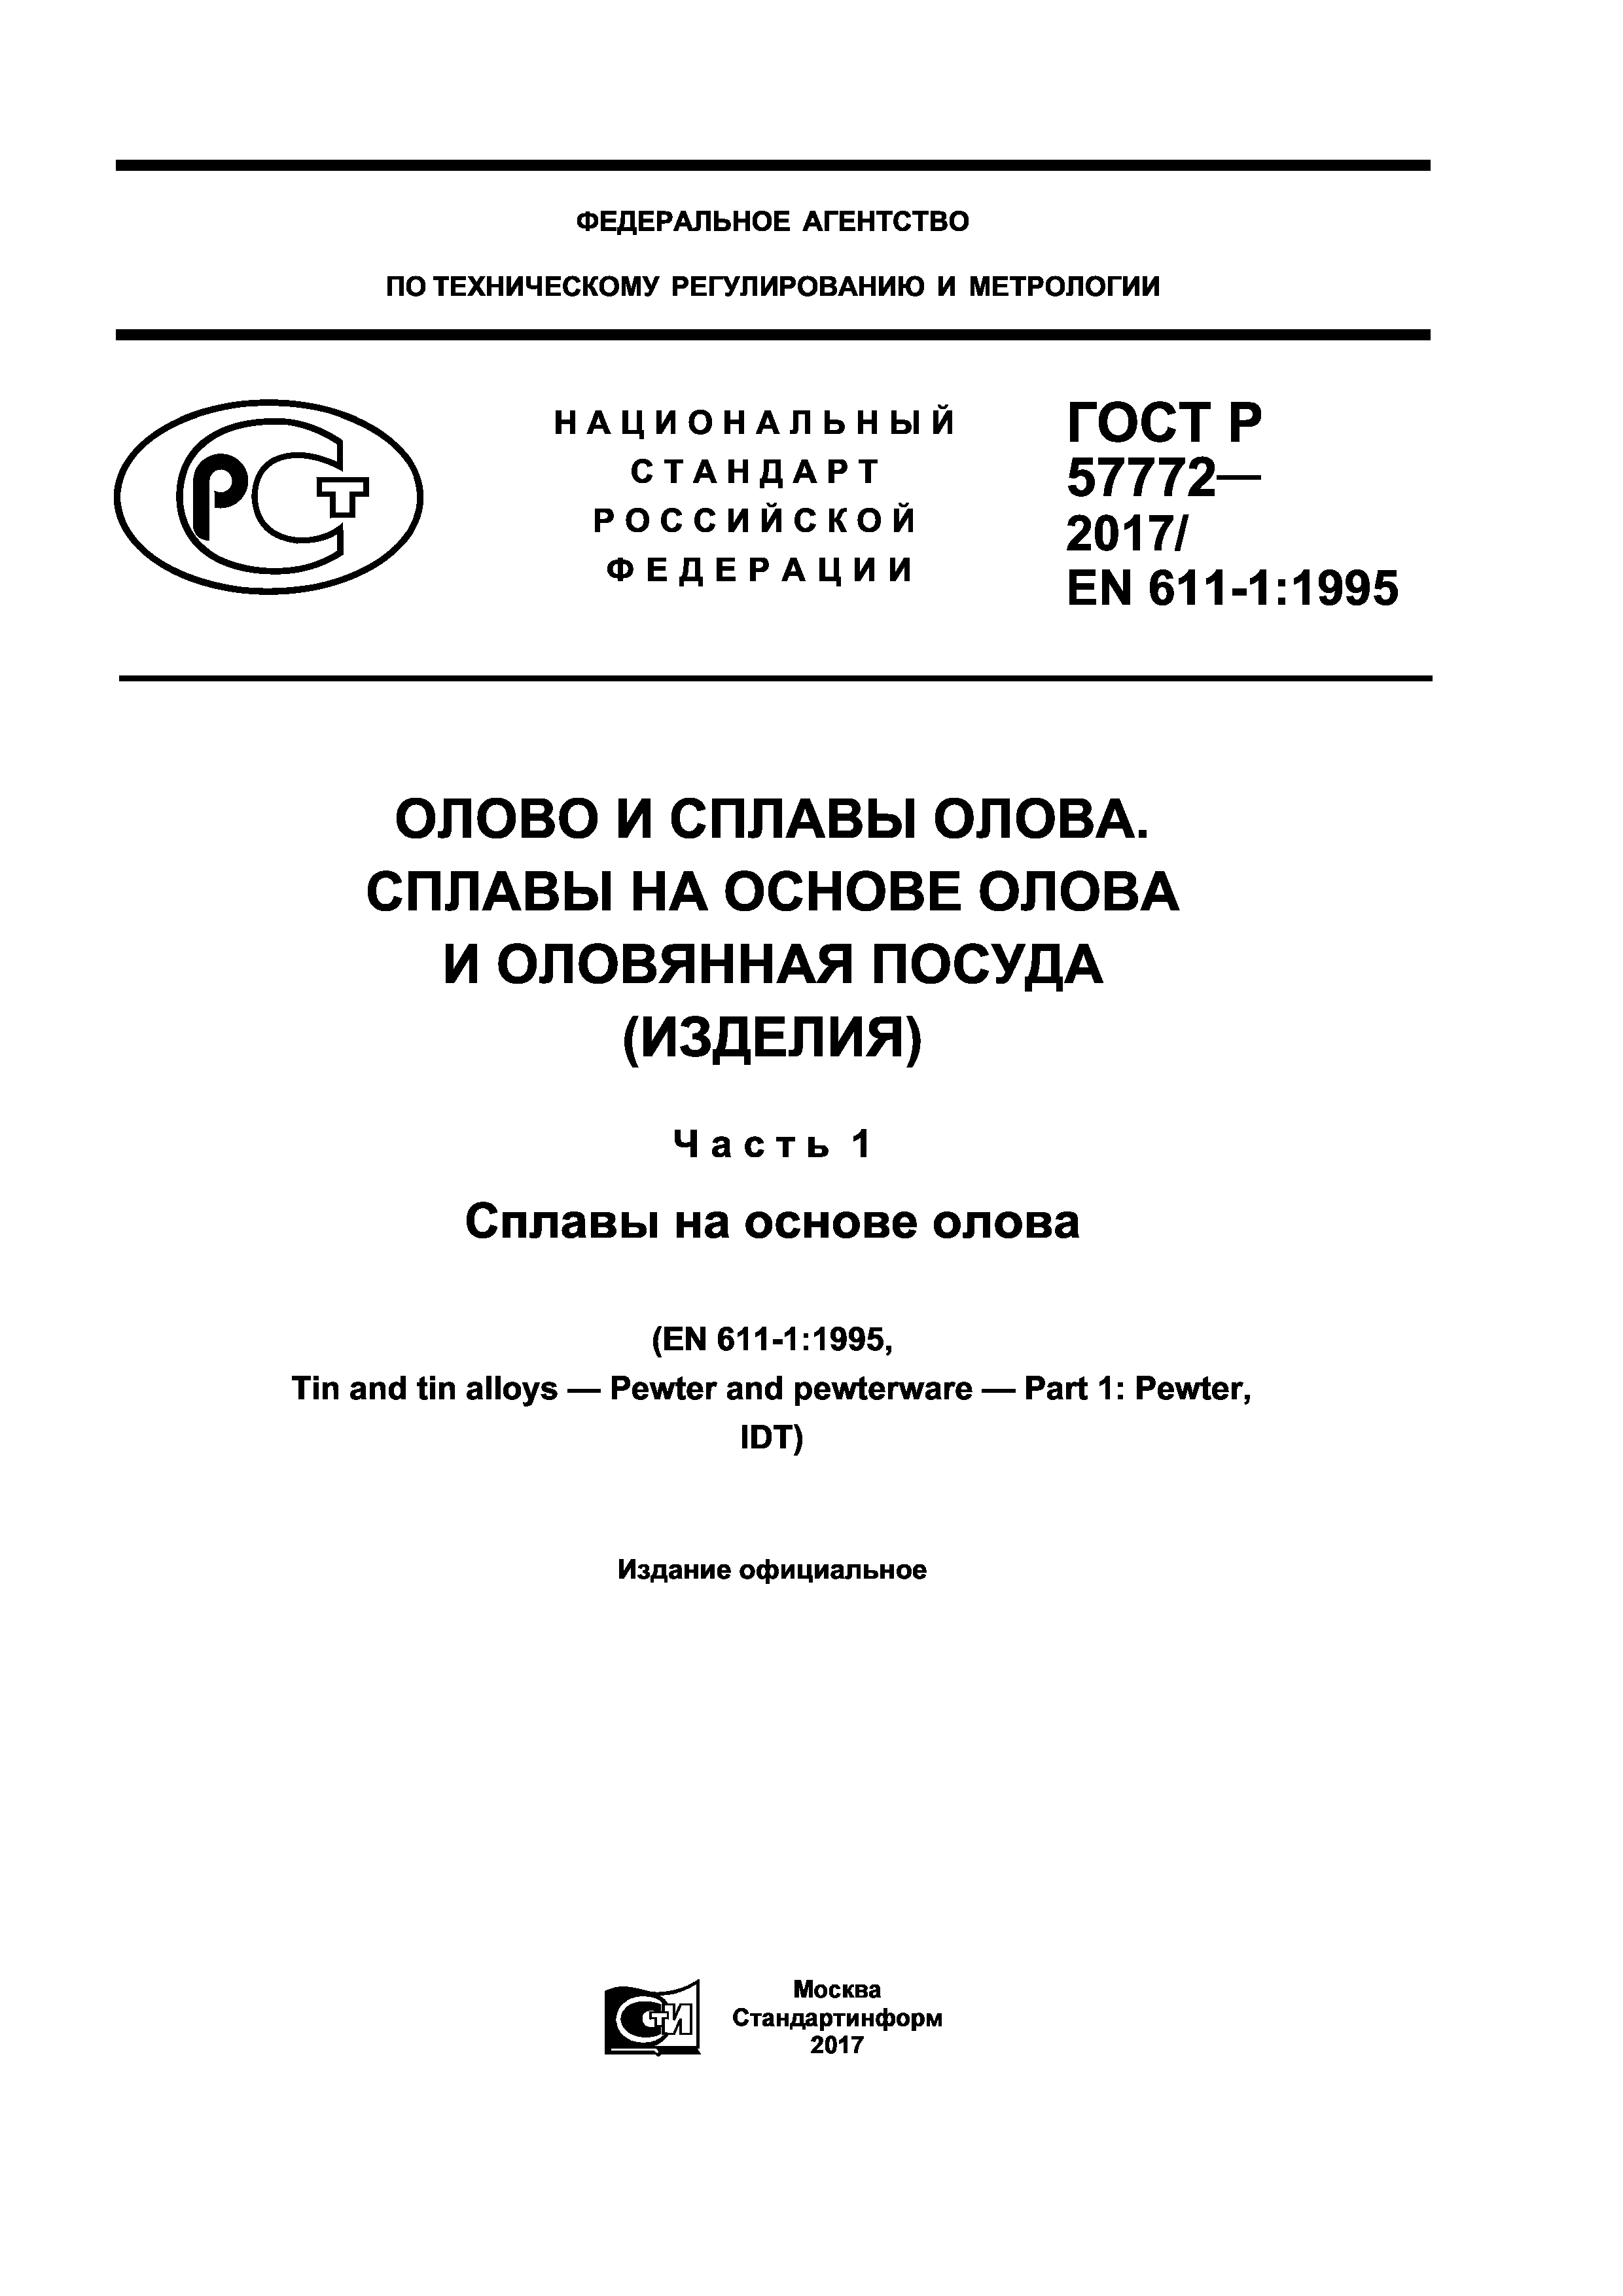 ГОСТ Р 57772-2017